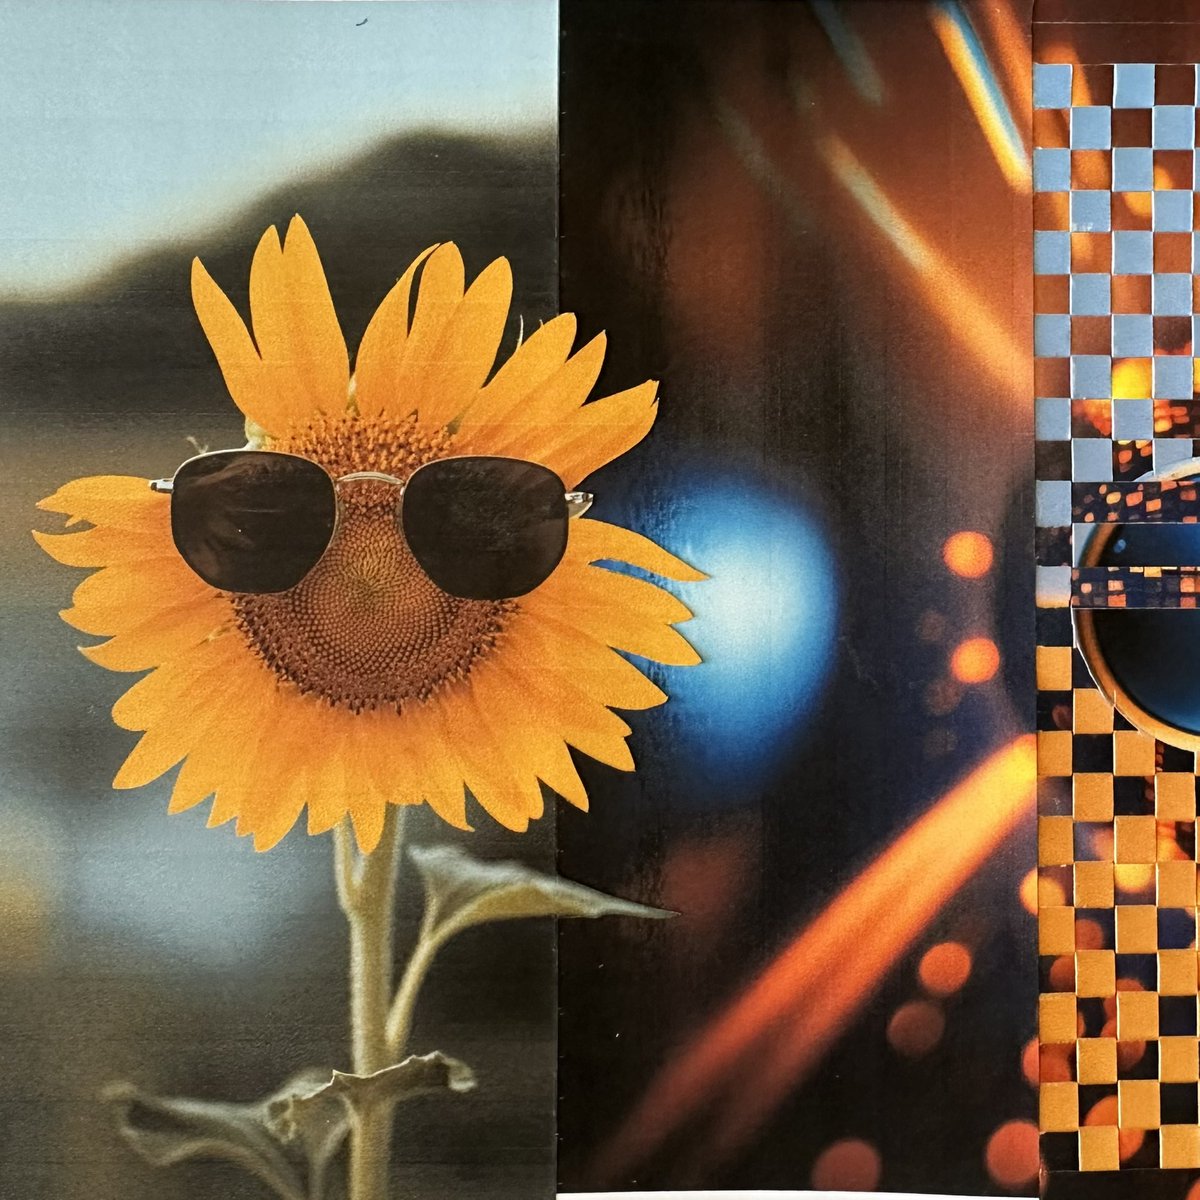 Listen Sunflower

#Februllage #februllage2023 #sunflower #analogcollage #collageart #wovencollage #handmadecollage #papercollage